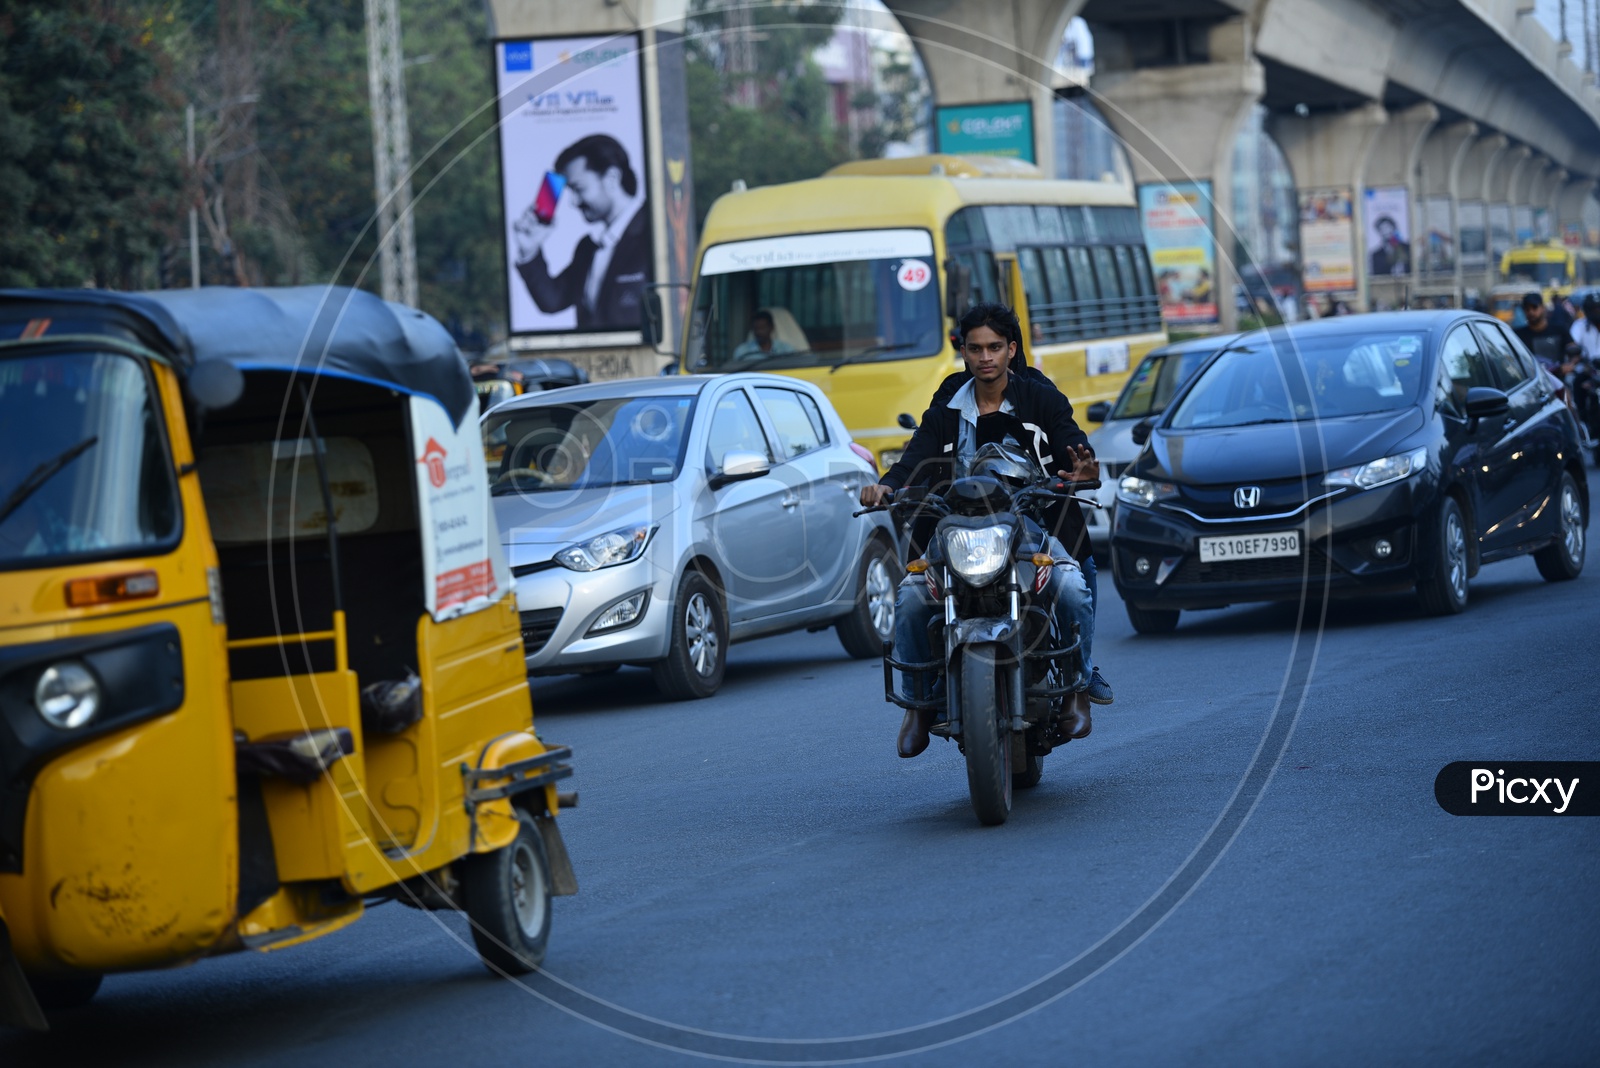 Without Helmet riding, Traffic Violators/offendors